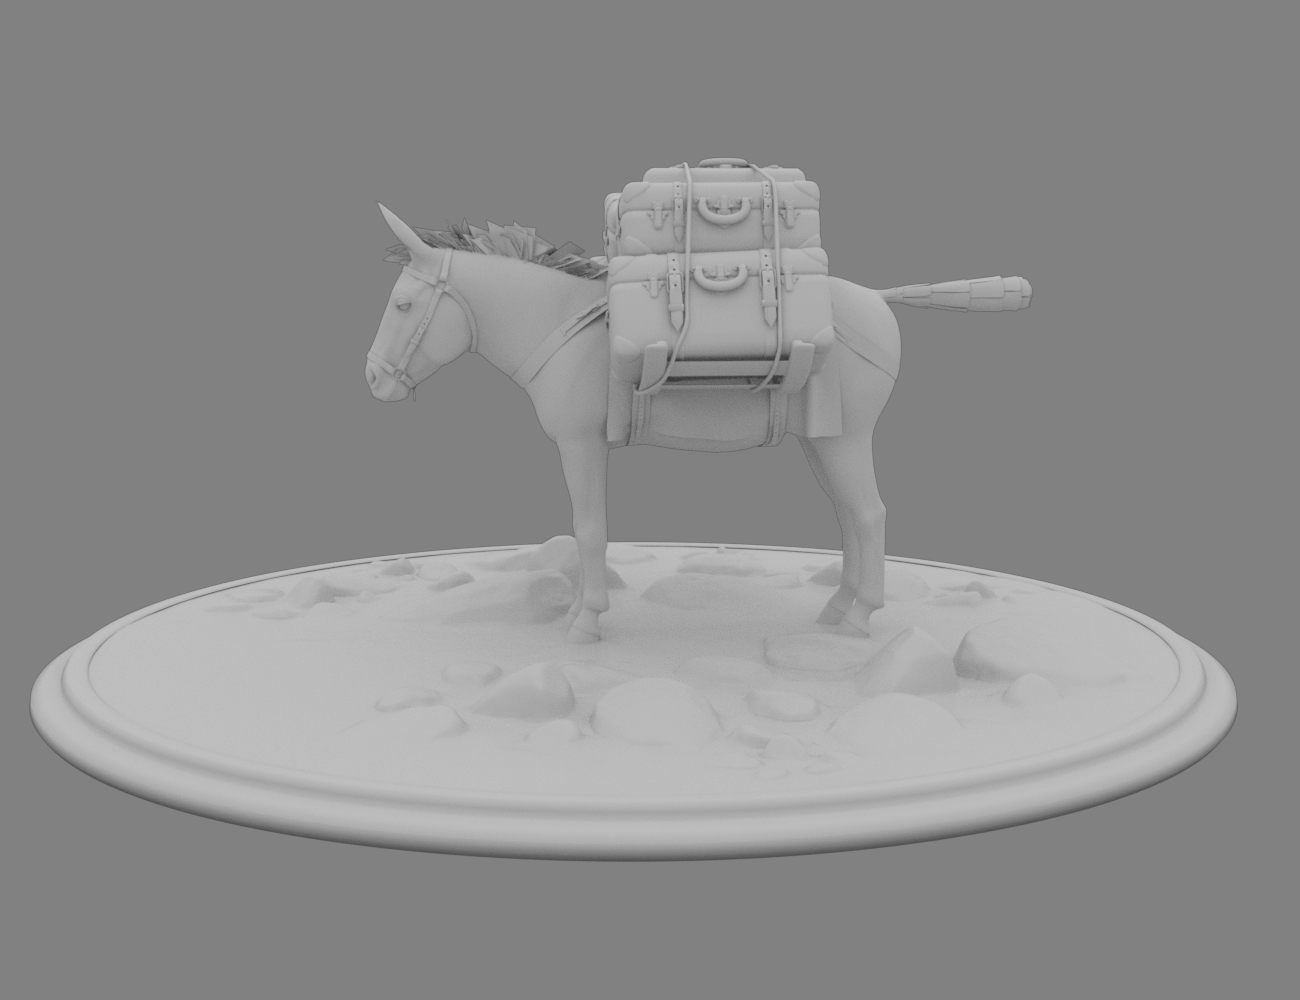 DS Cadichon for Daz Horse 2 by: Deepsea, 3D Models by Daz 3D